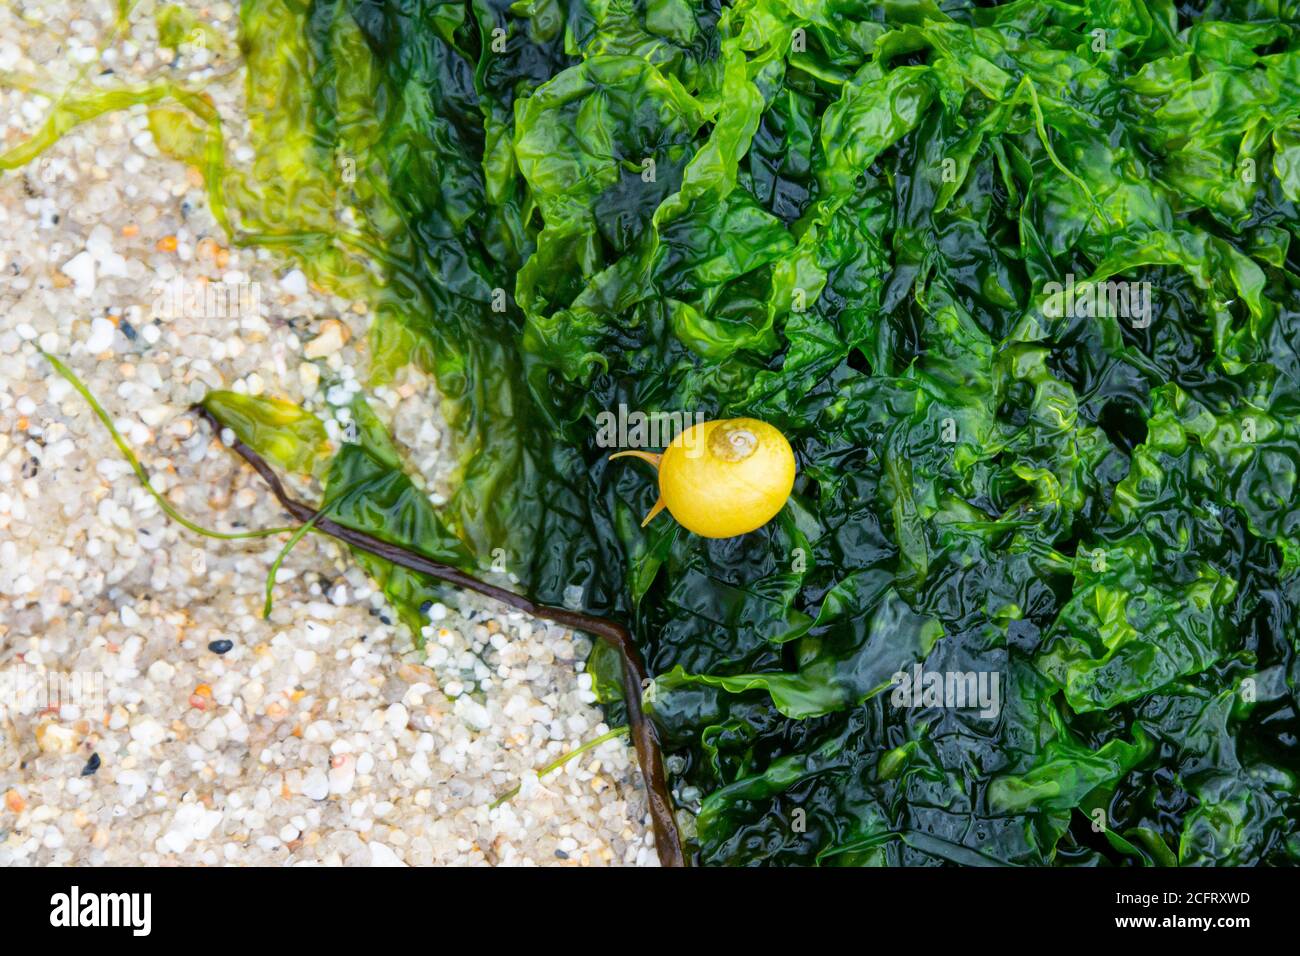 A yellow flat periwinkle (Littorina obtusata) on a green seaweed Stock Photo